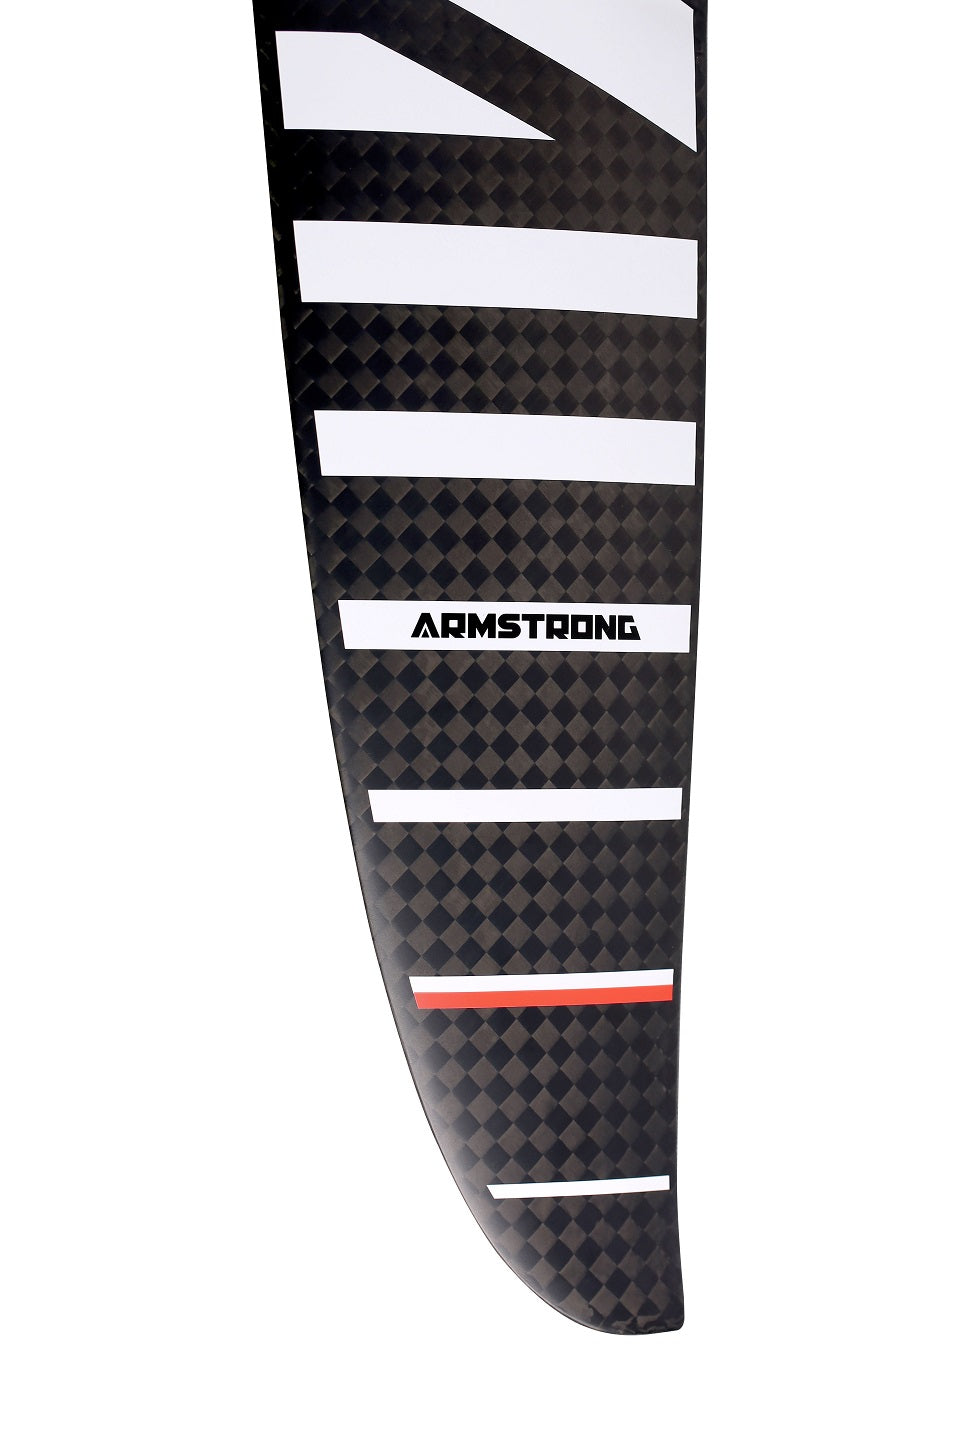 Armstrong MA1000